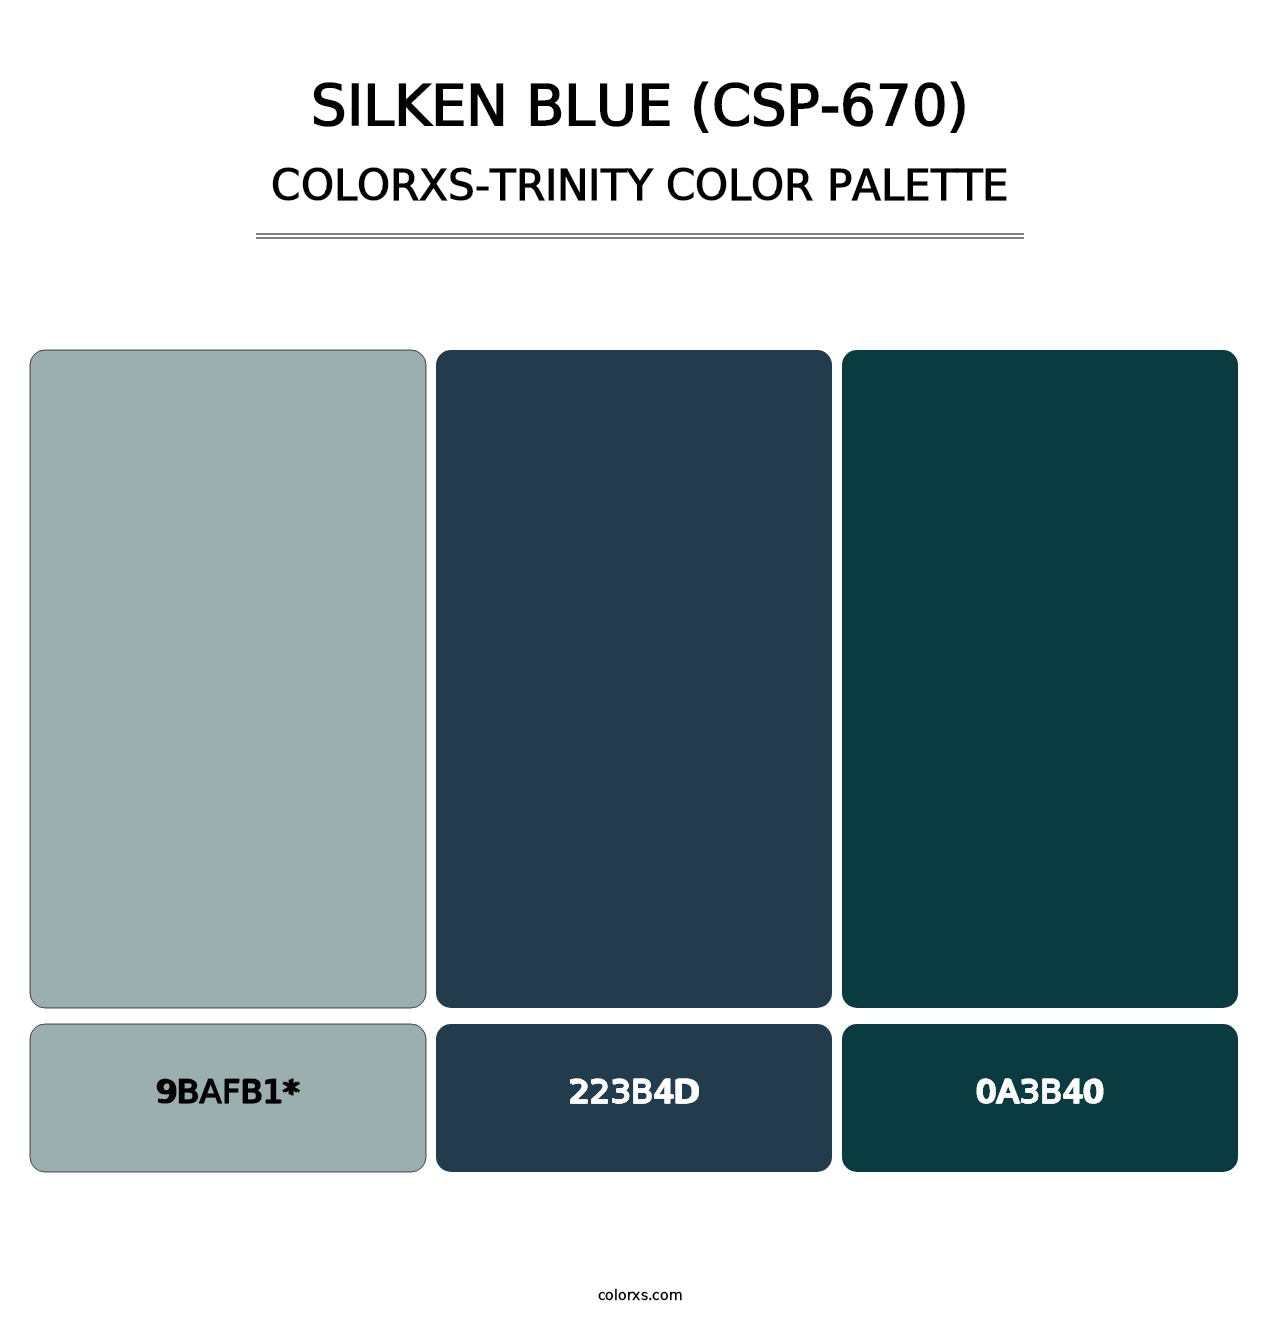 Silken Blue (CSP-670) - Colorxs Trinity Palette